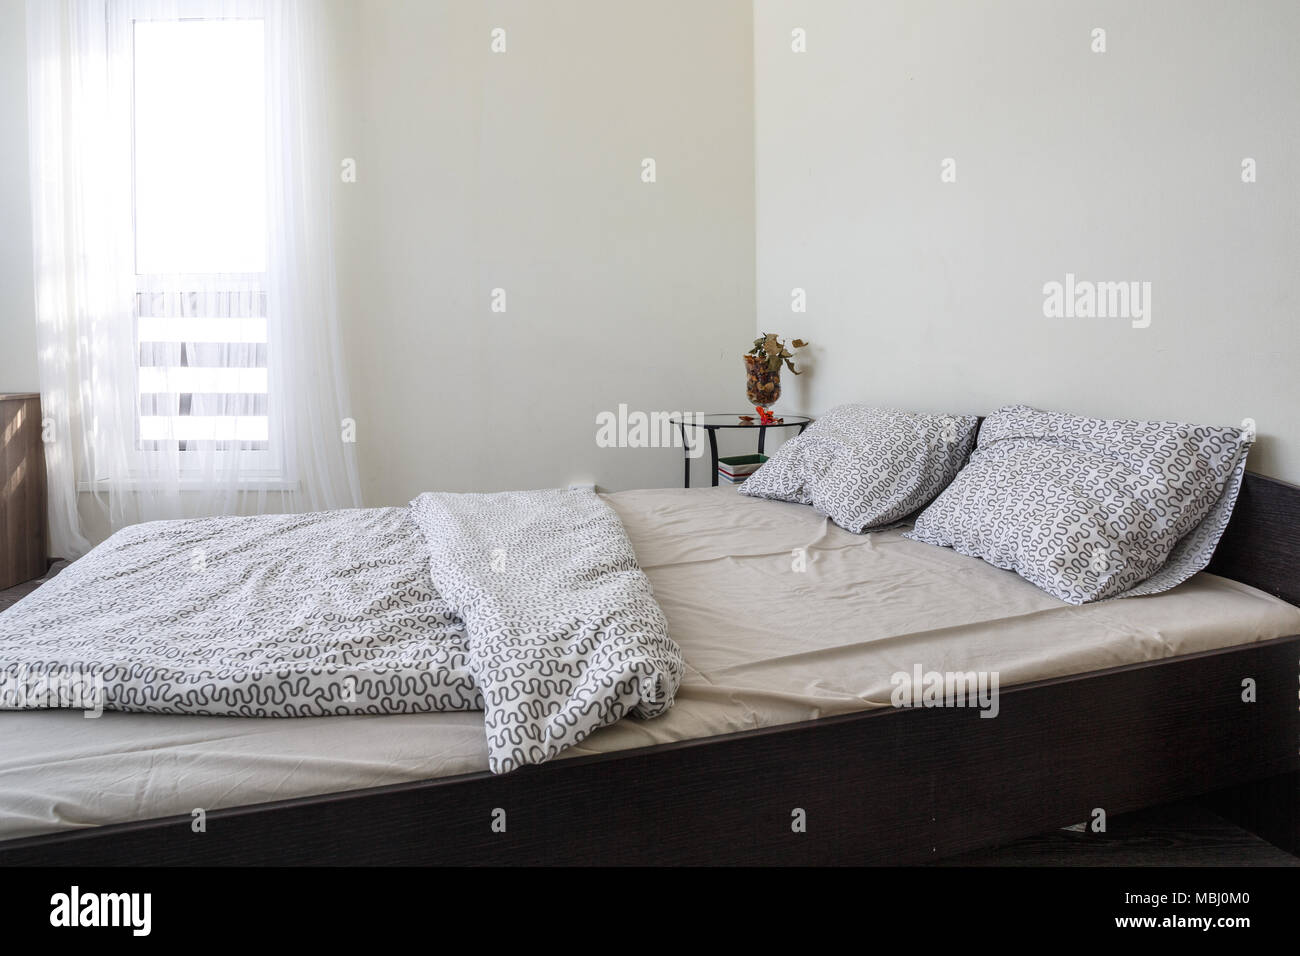 Cozy Minimalistic Bedroom Interir Stock Photo 179260592 Alamy